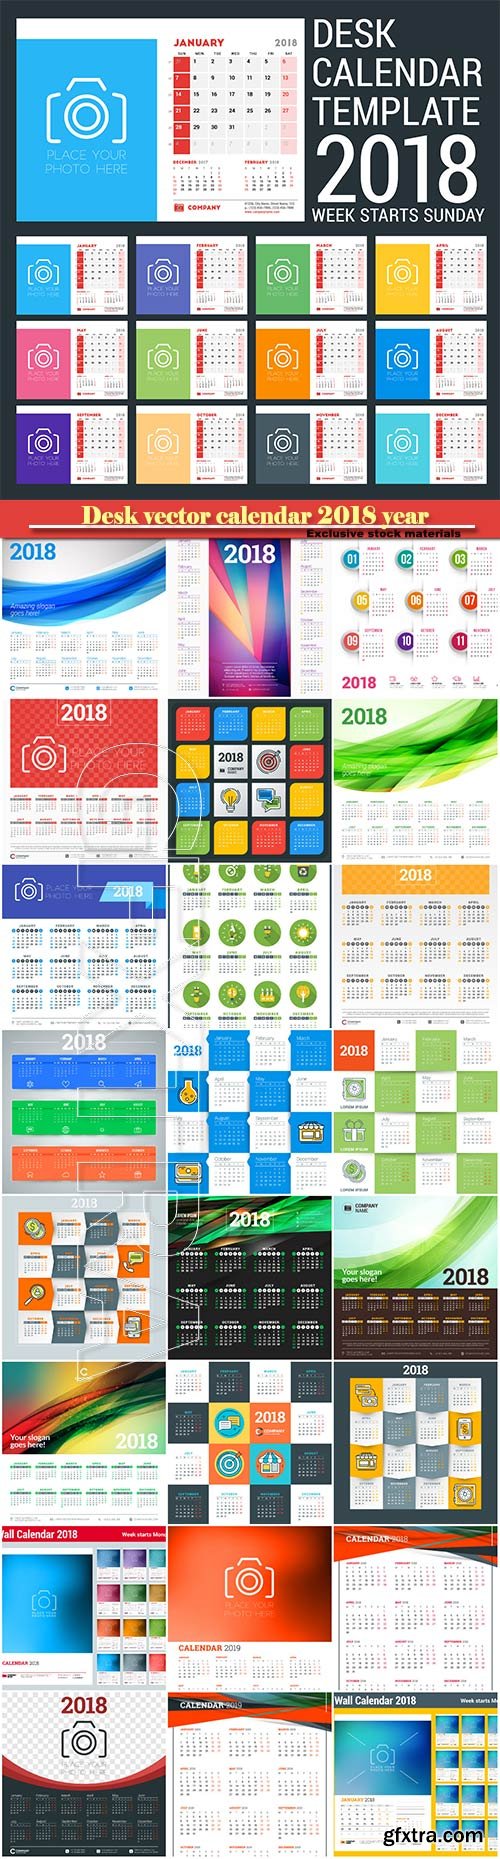 Desk vector calendar design template for 2018 year